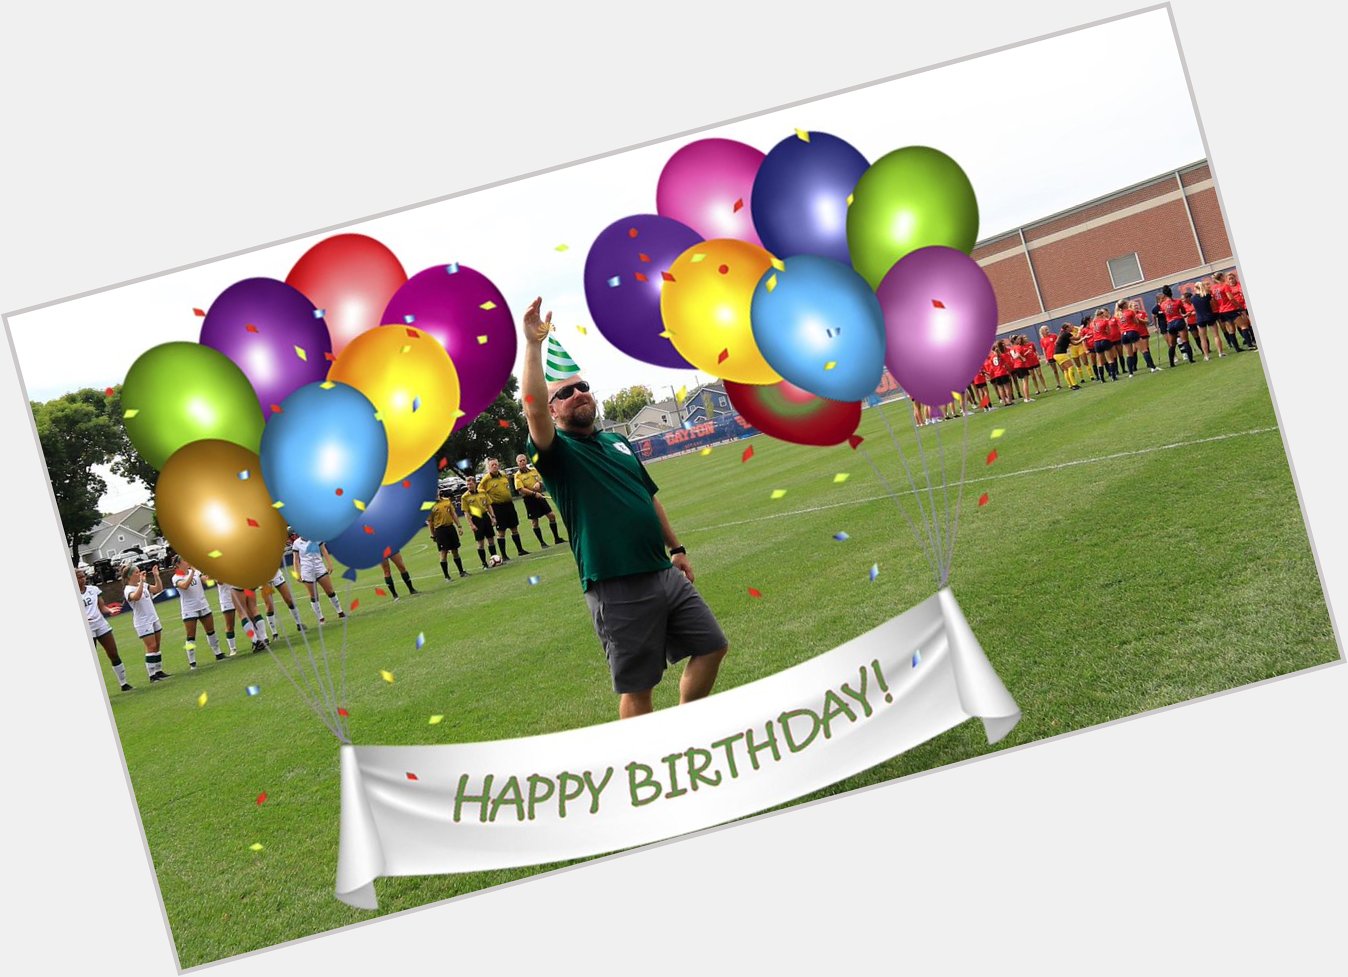 Wishing a very happy birthday to our head coach, Scott Hall! | | 